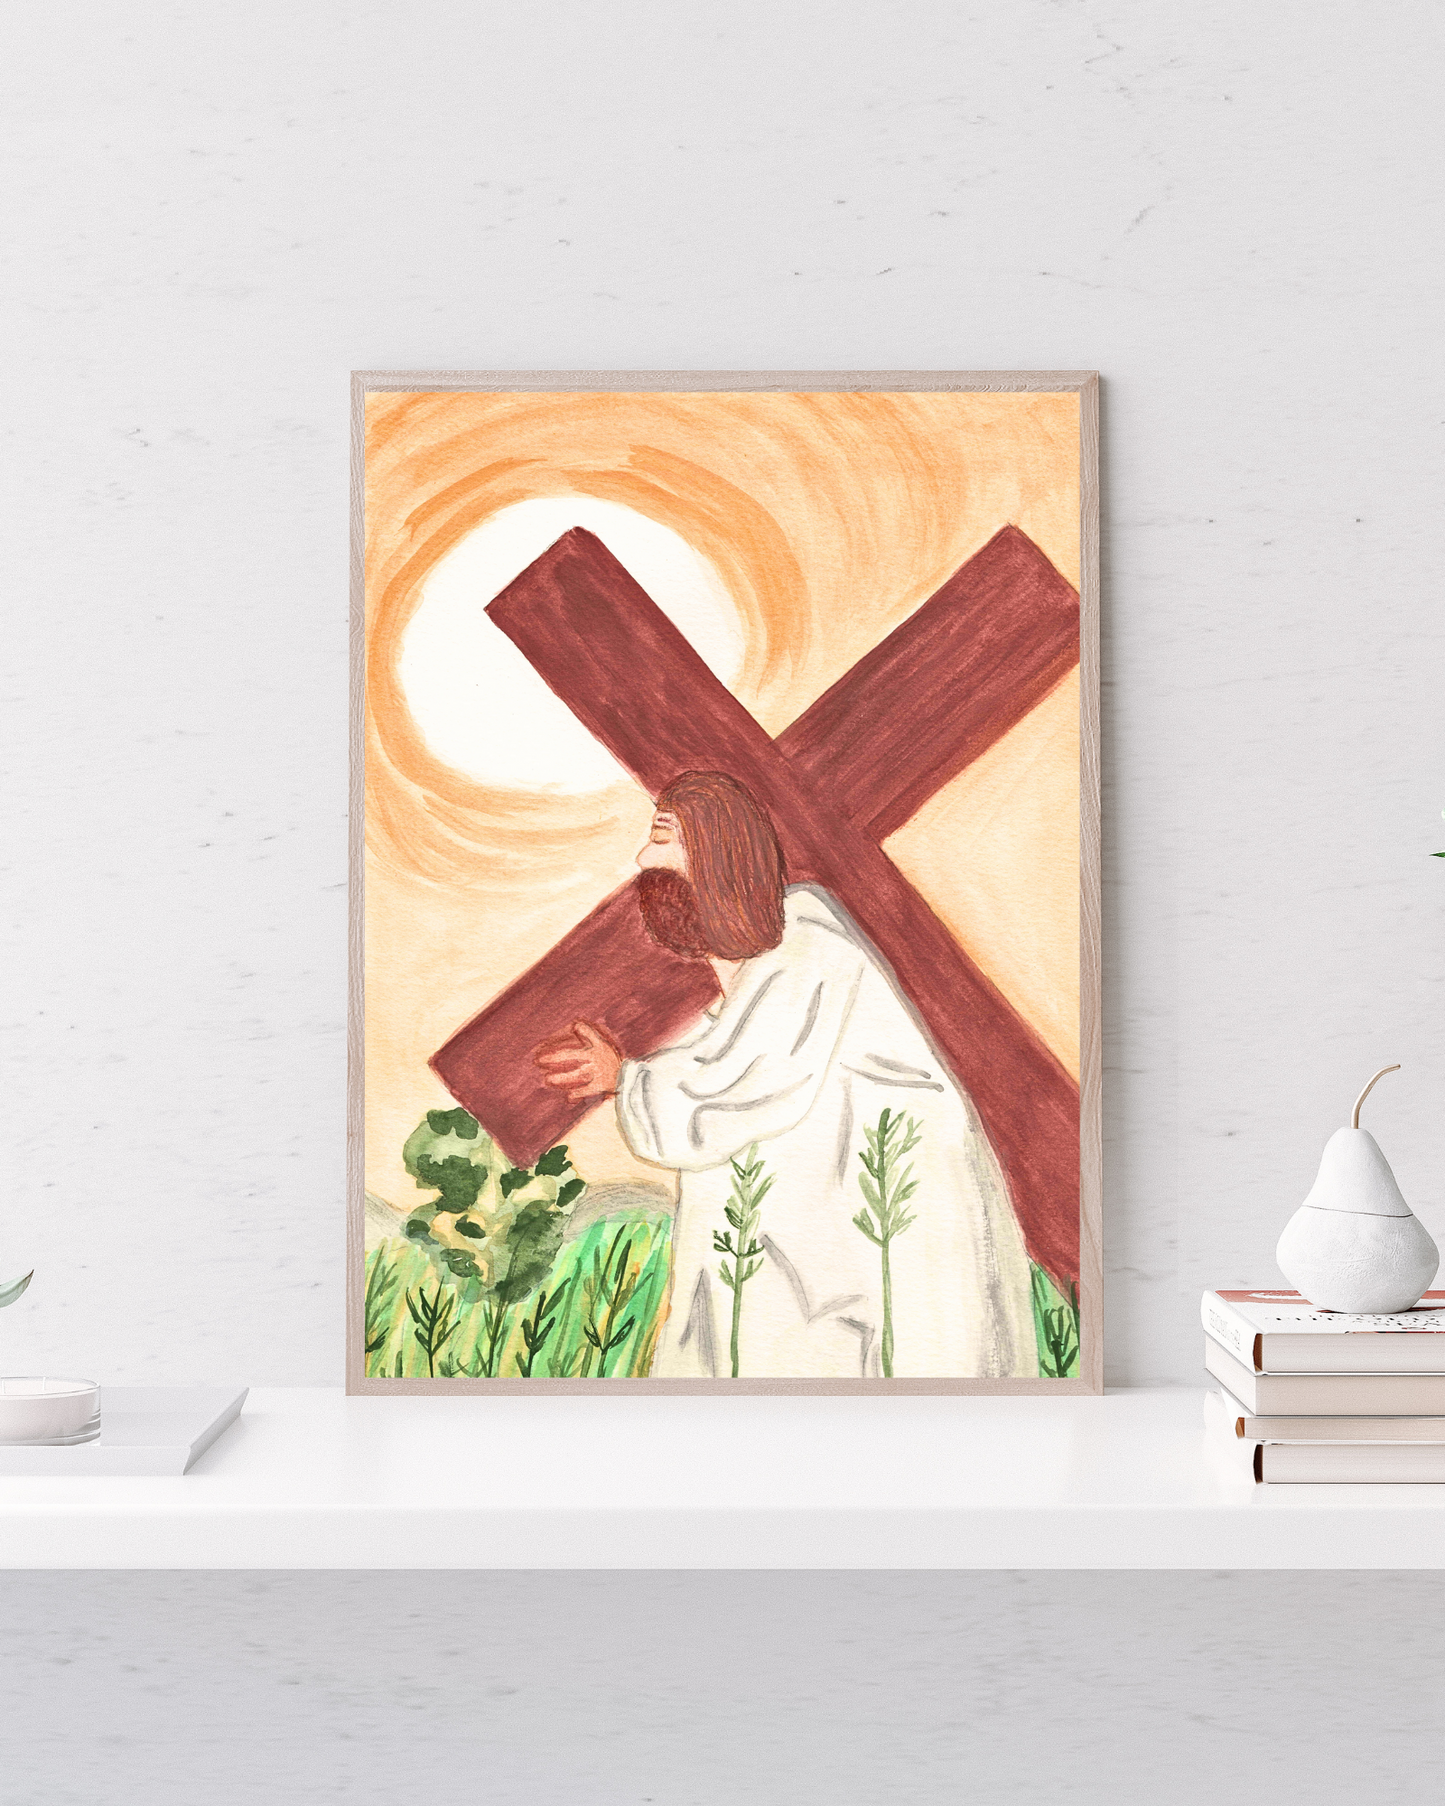 Jesus carries His Cross